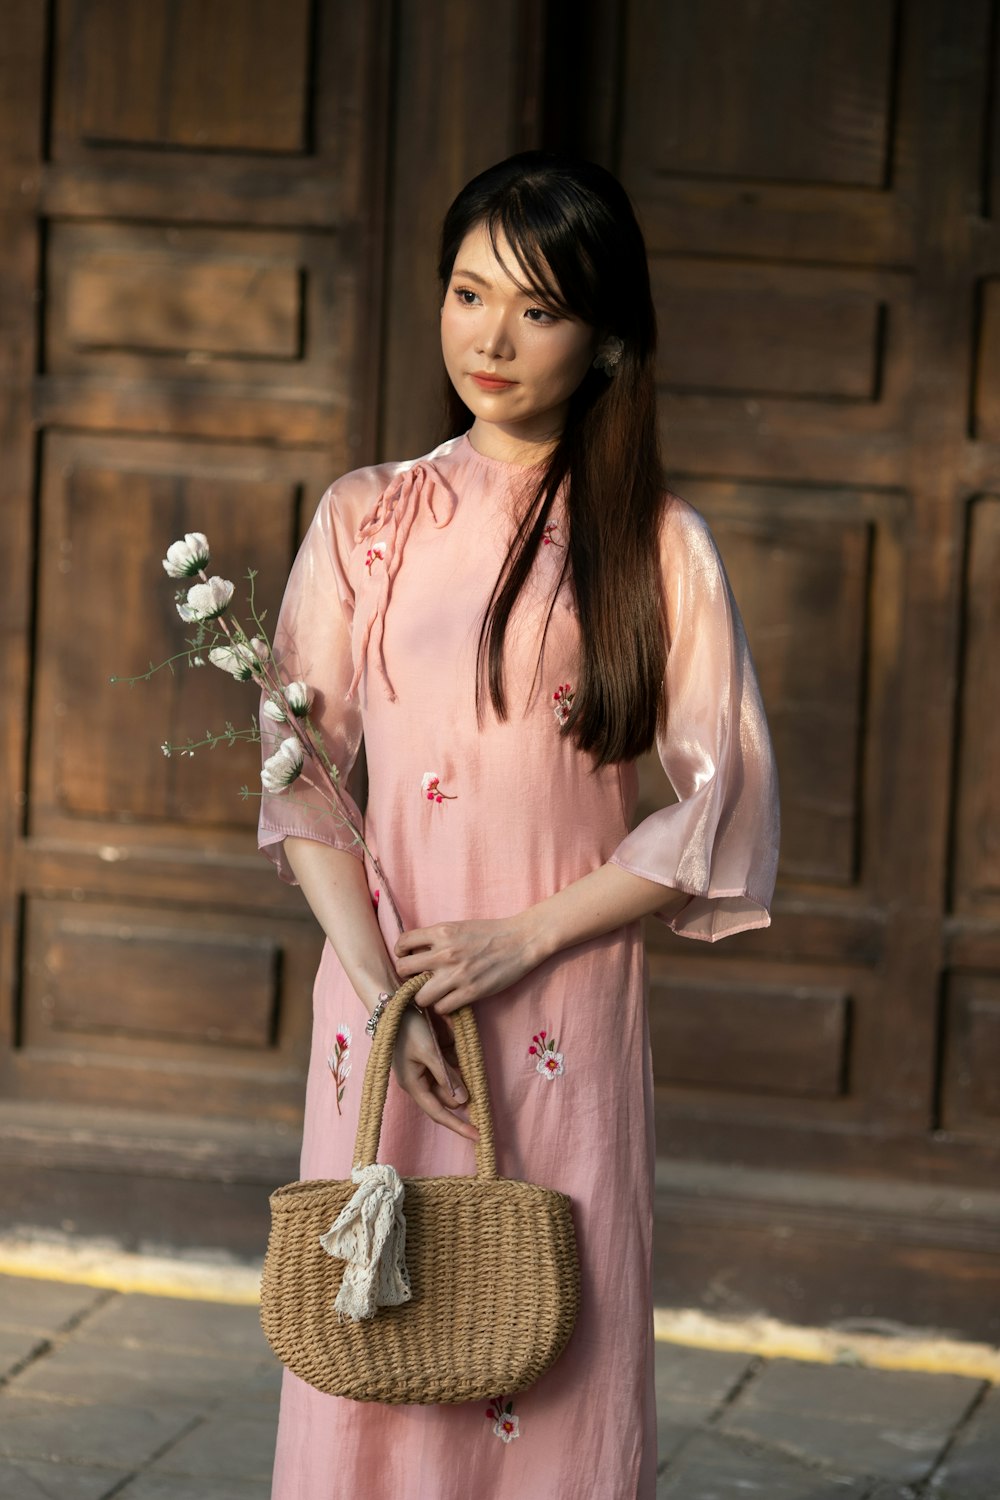 a woman in a pink dress holding a wicker basket